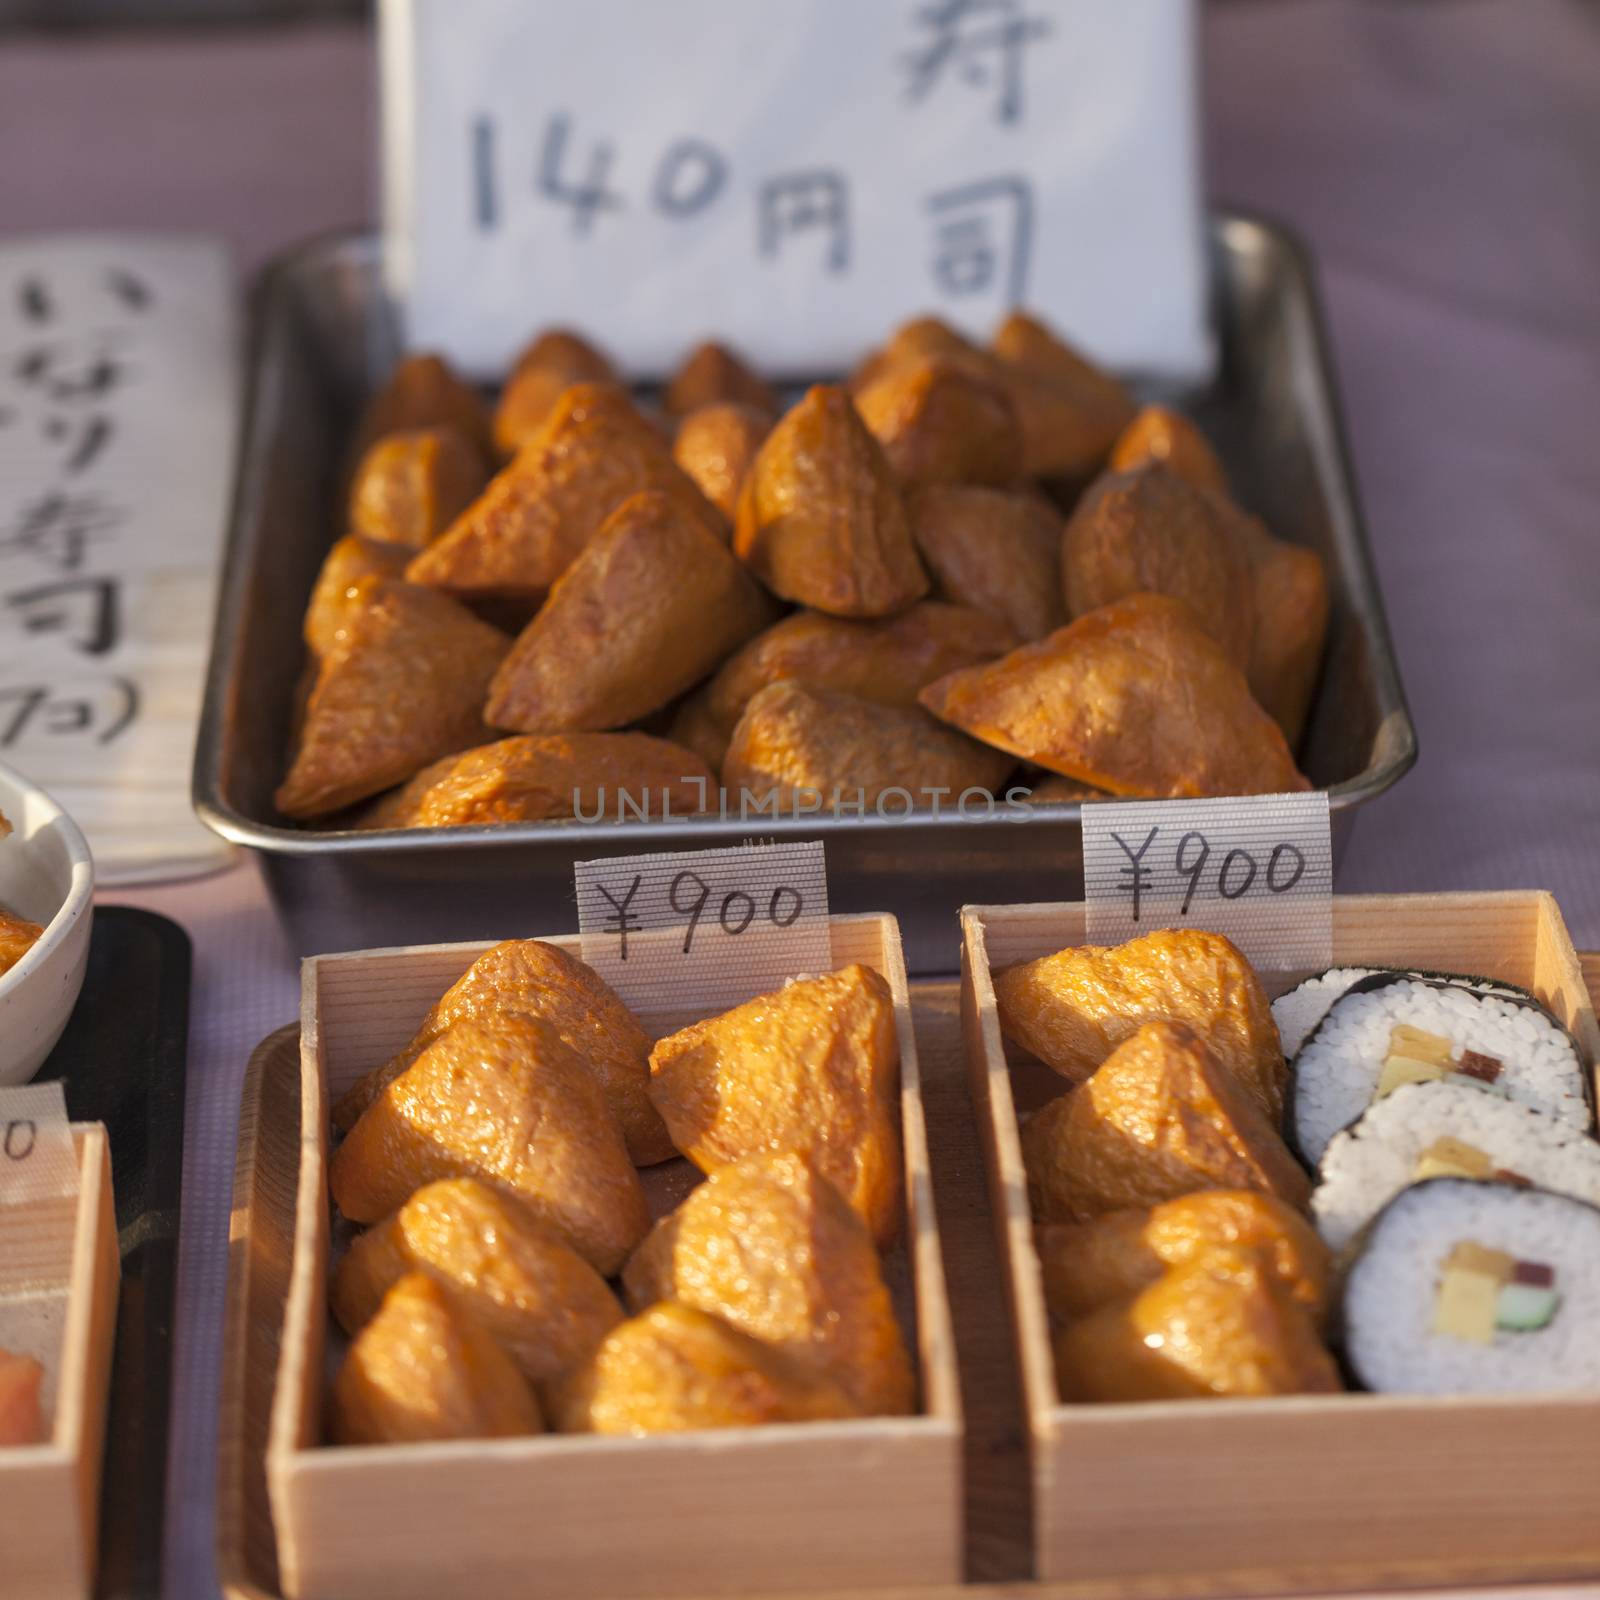 Traditional asian food market, Japan.

